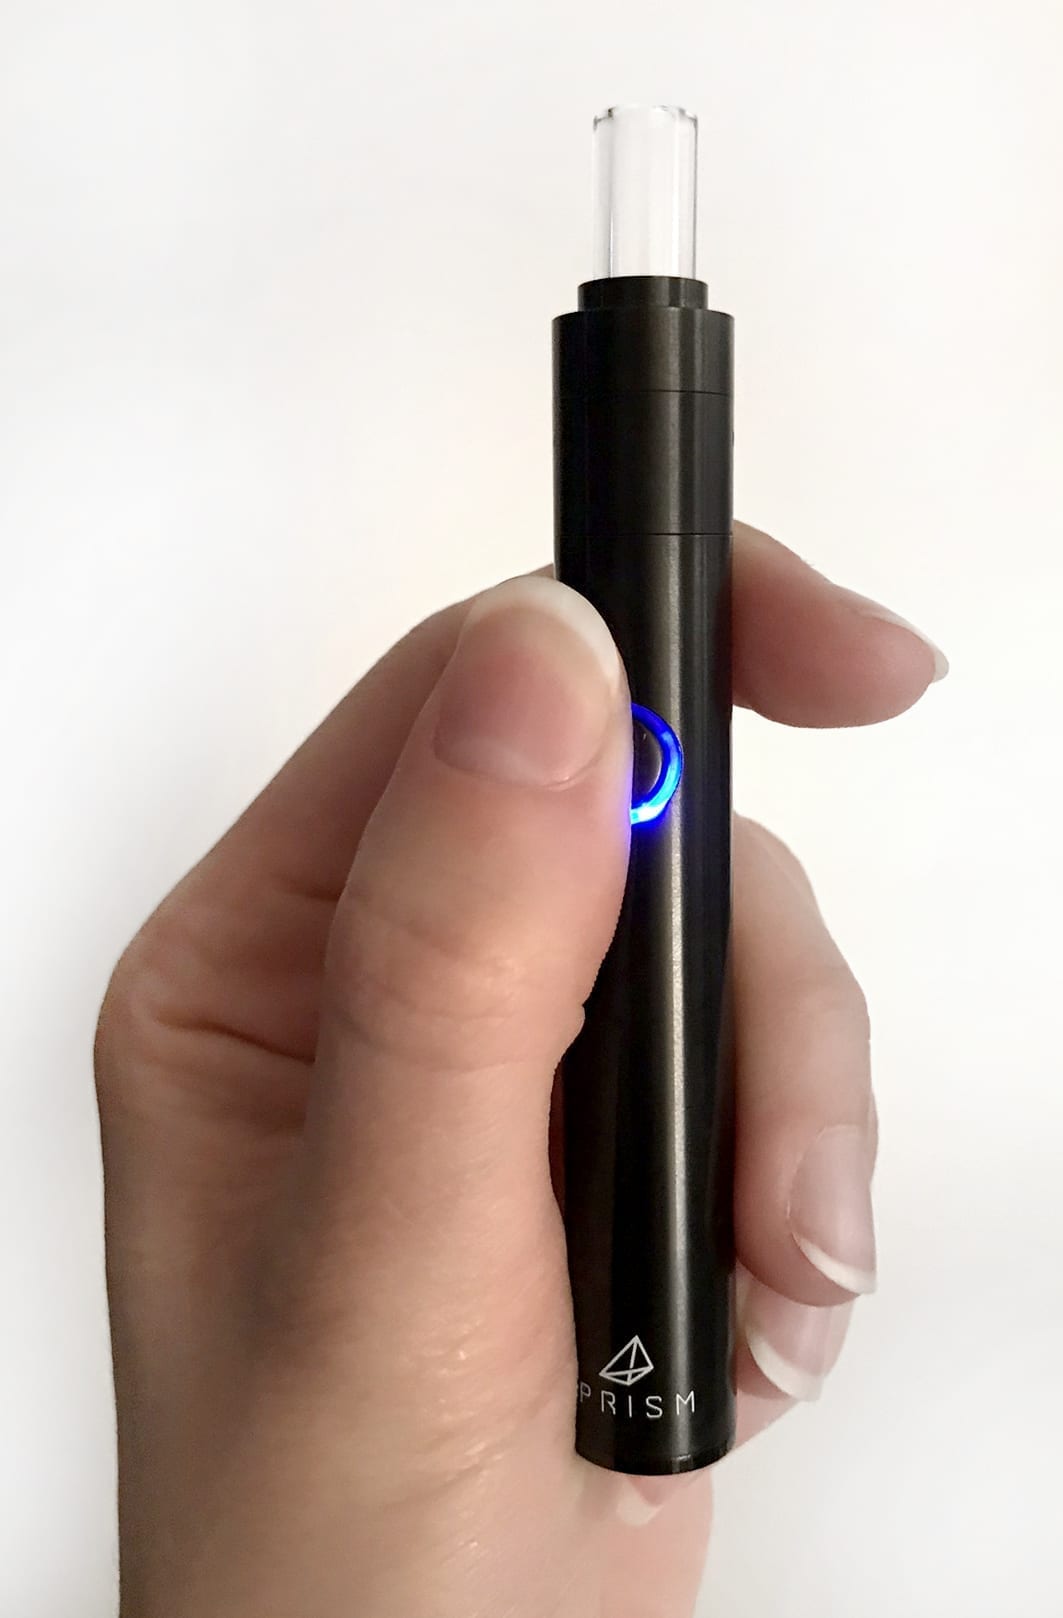 KandyPens Prism vape pen temperature settings